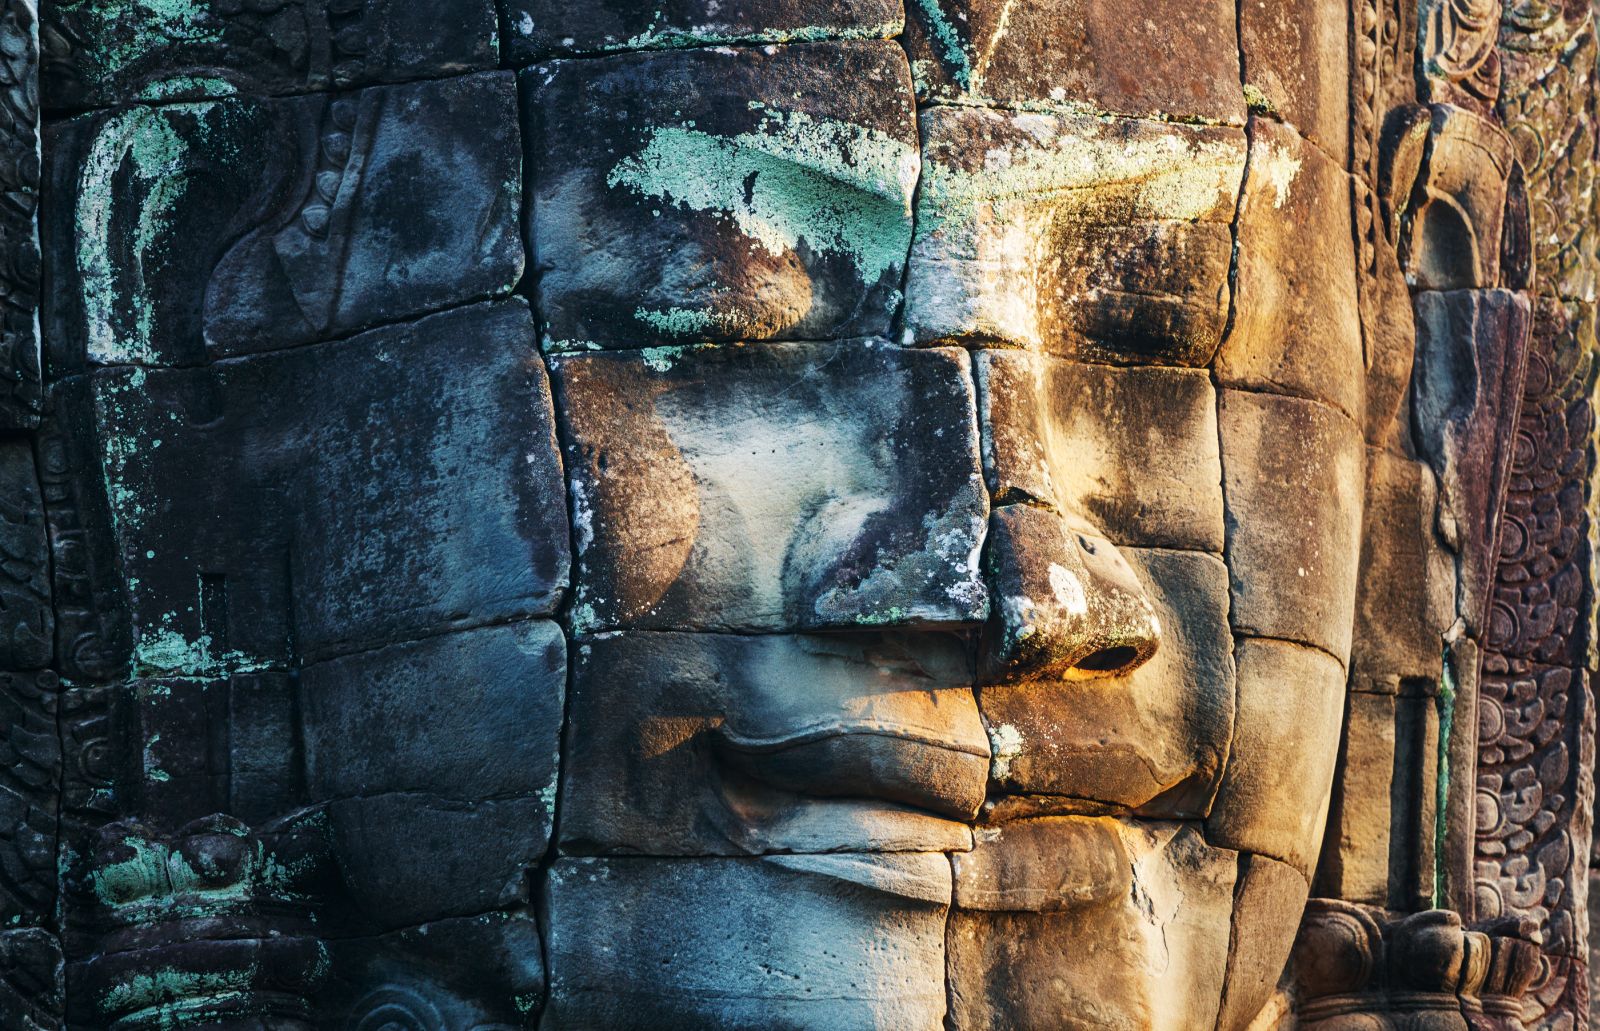 Close up of enormous stone buddha face at the Bayon Temple in Angkor Cambodia